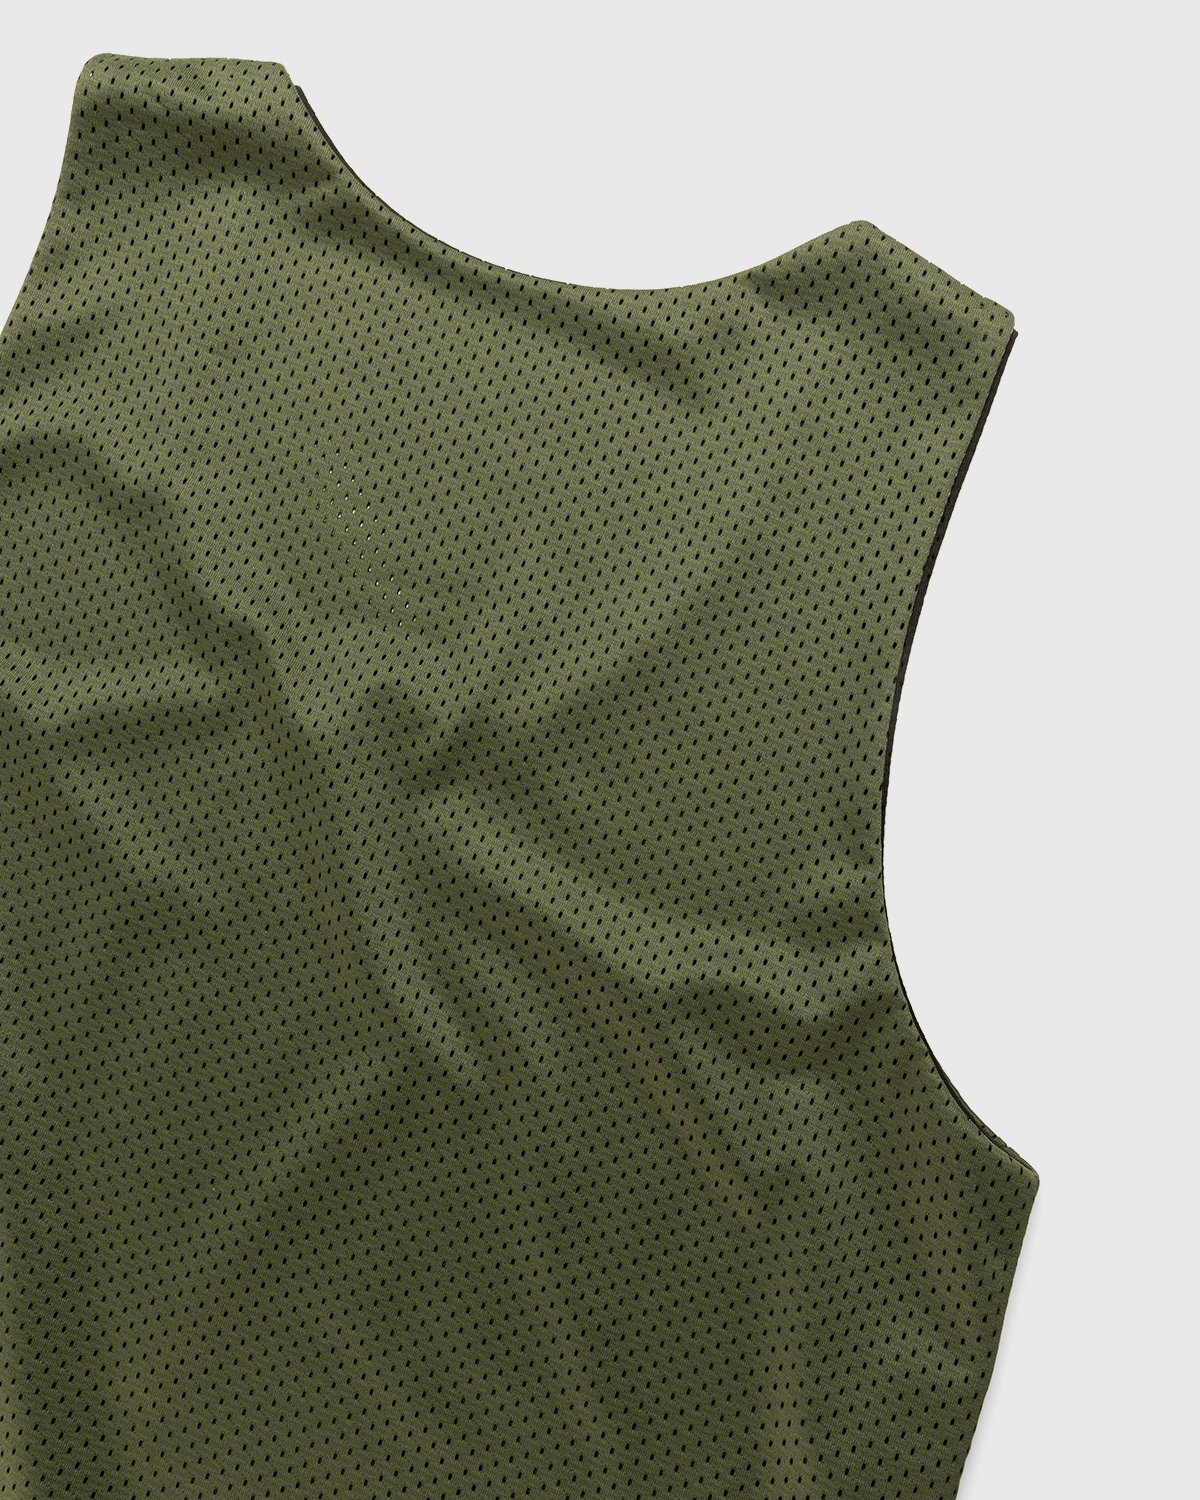 Highsnobiety - HS Sports Reversible Mesh Tank Top Black/Khaki - Clothing - Green - Image 9